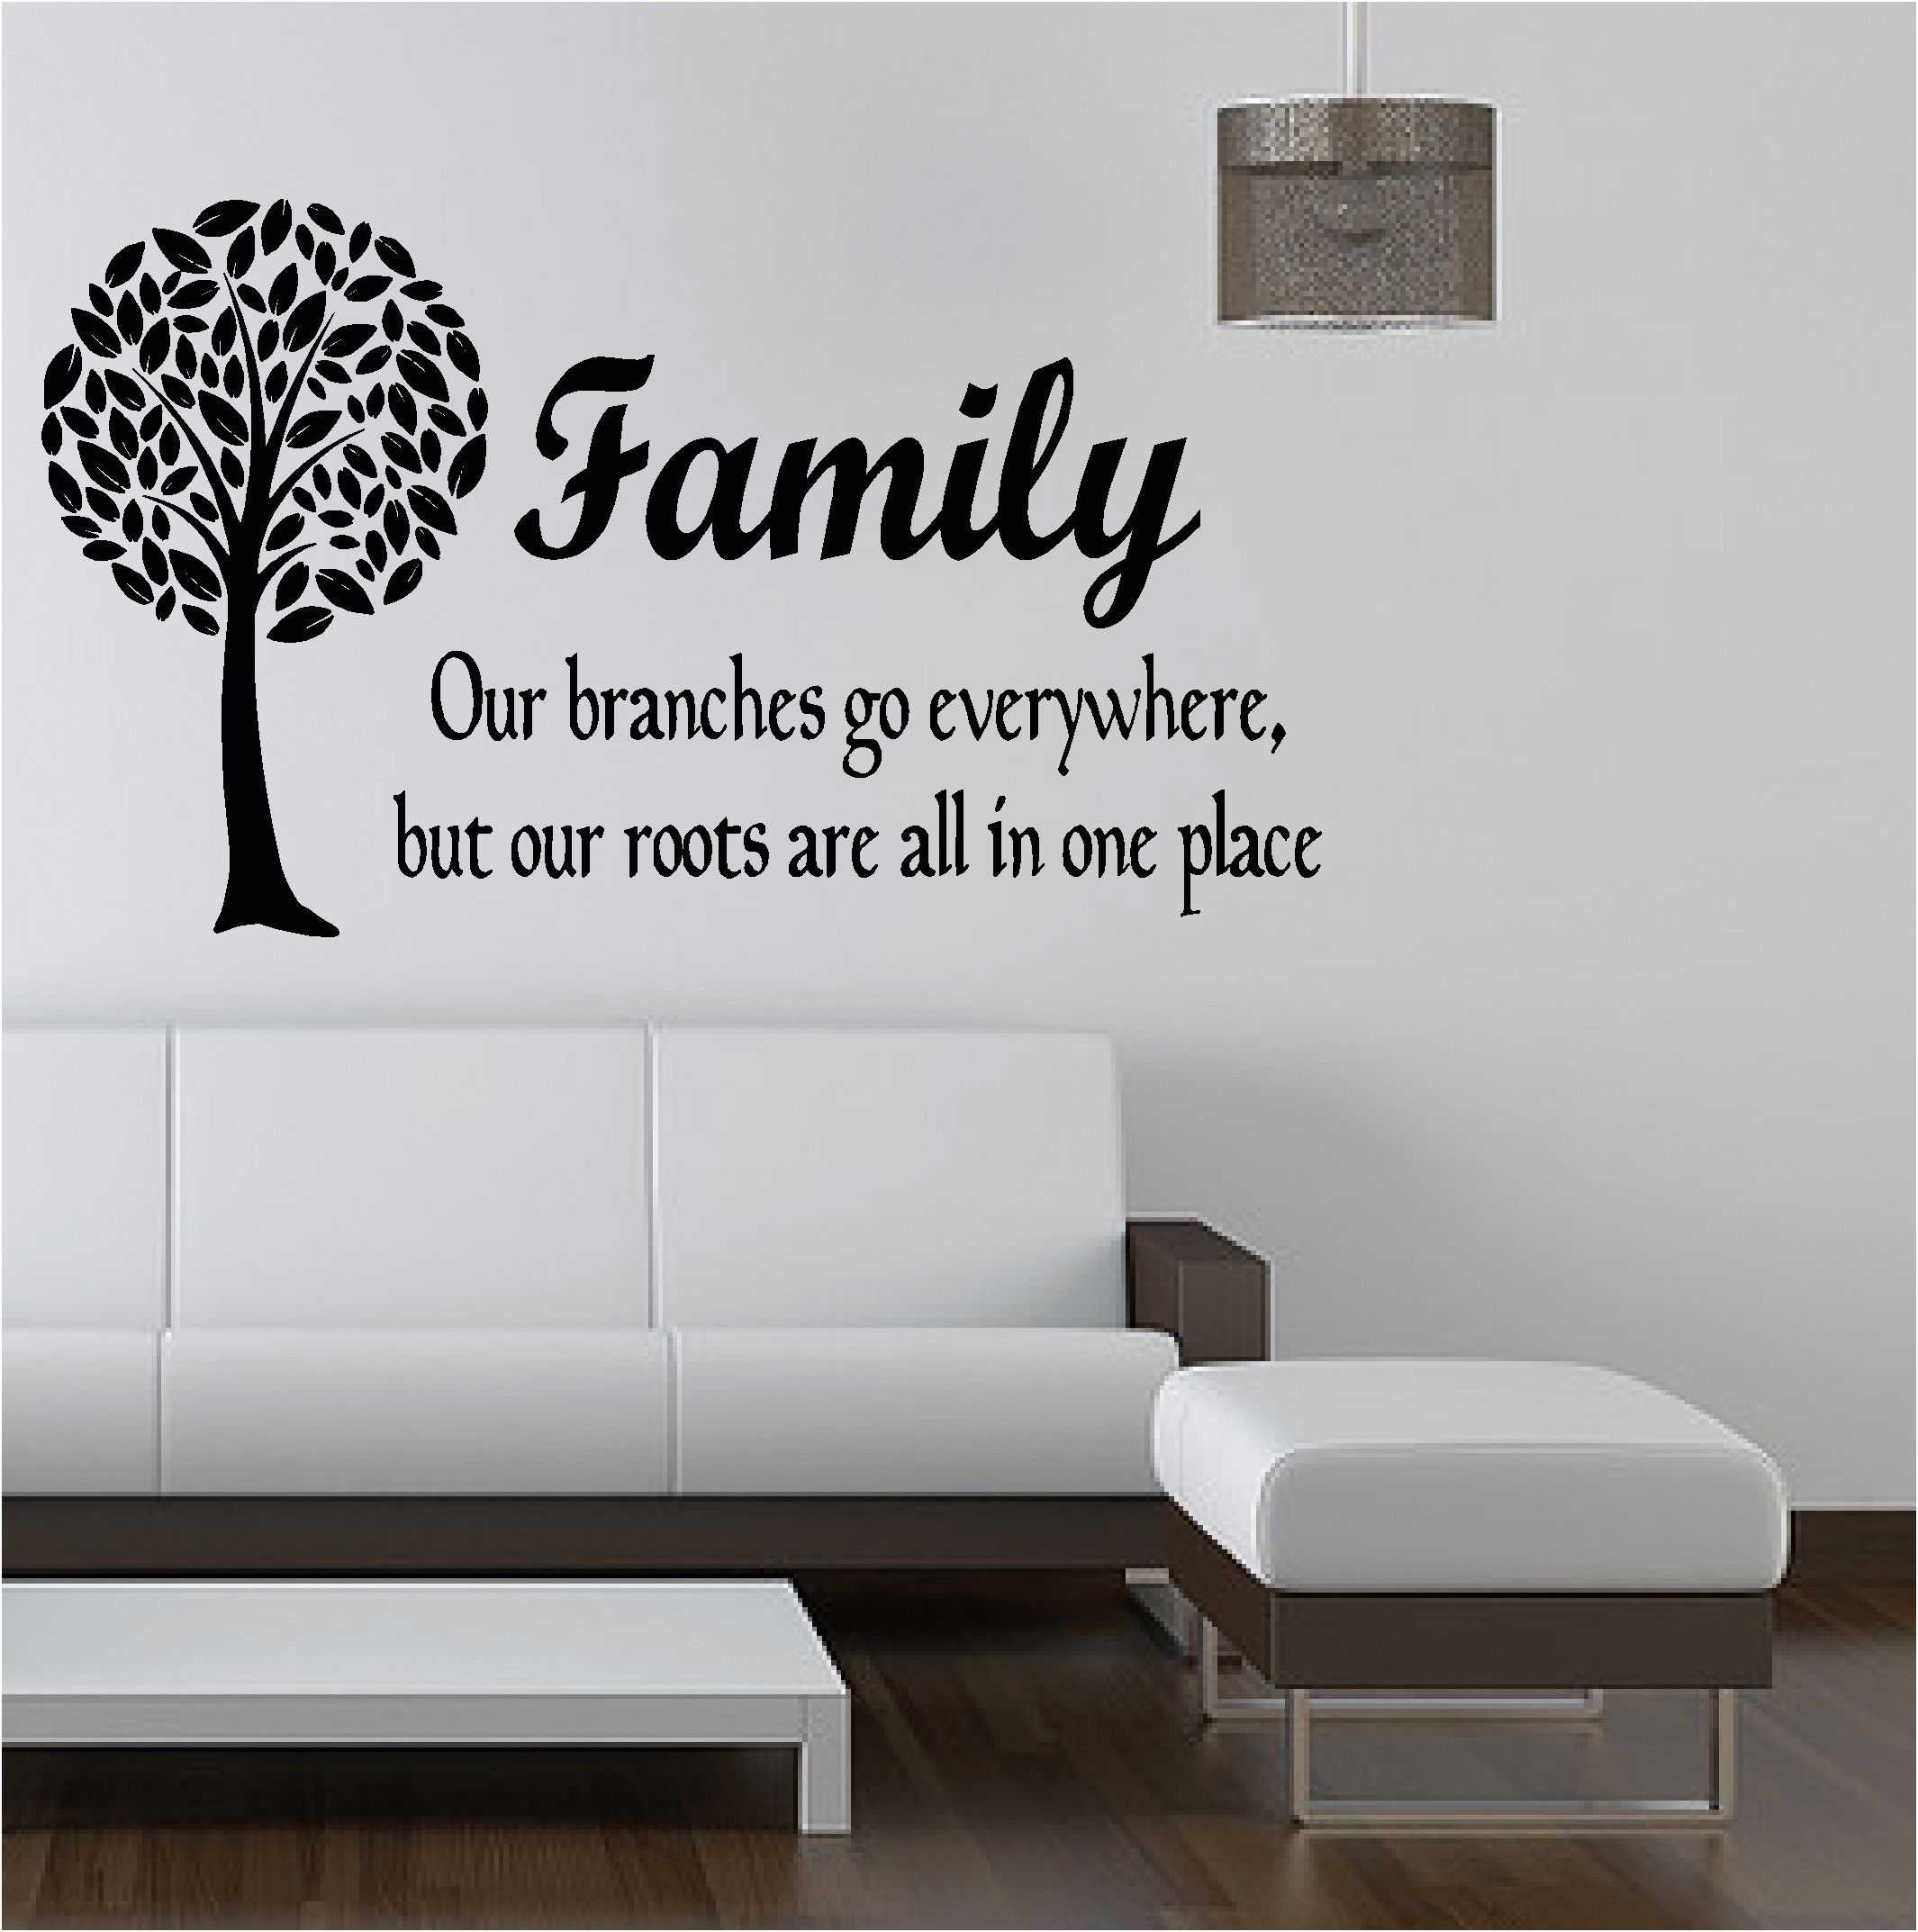 Family Tree Wall Art Vinyl Wwwpixsharkcom Images, Family Wall Art Regarding Family Tree Wall Art (View 20 of 20)